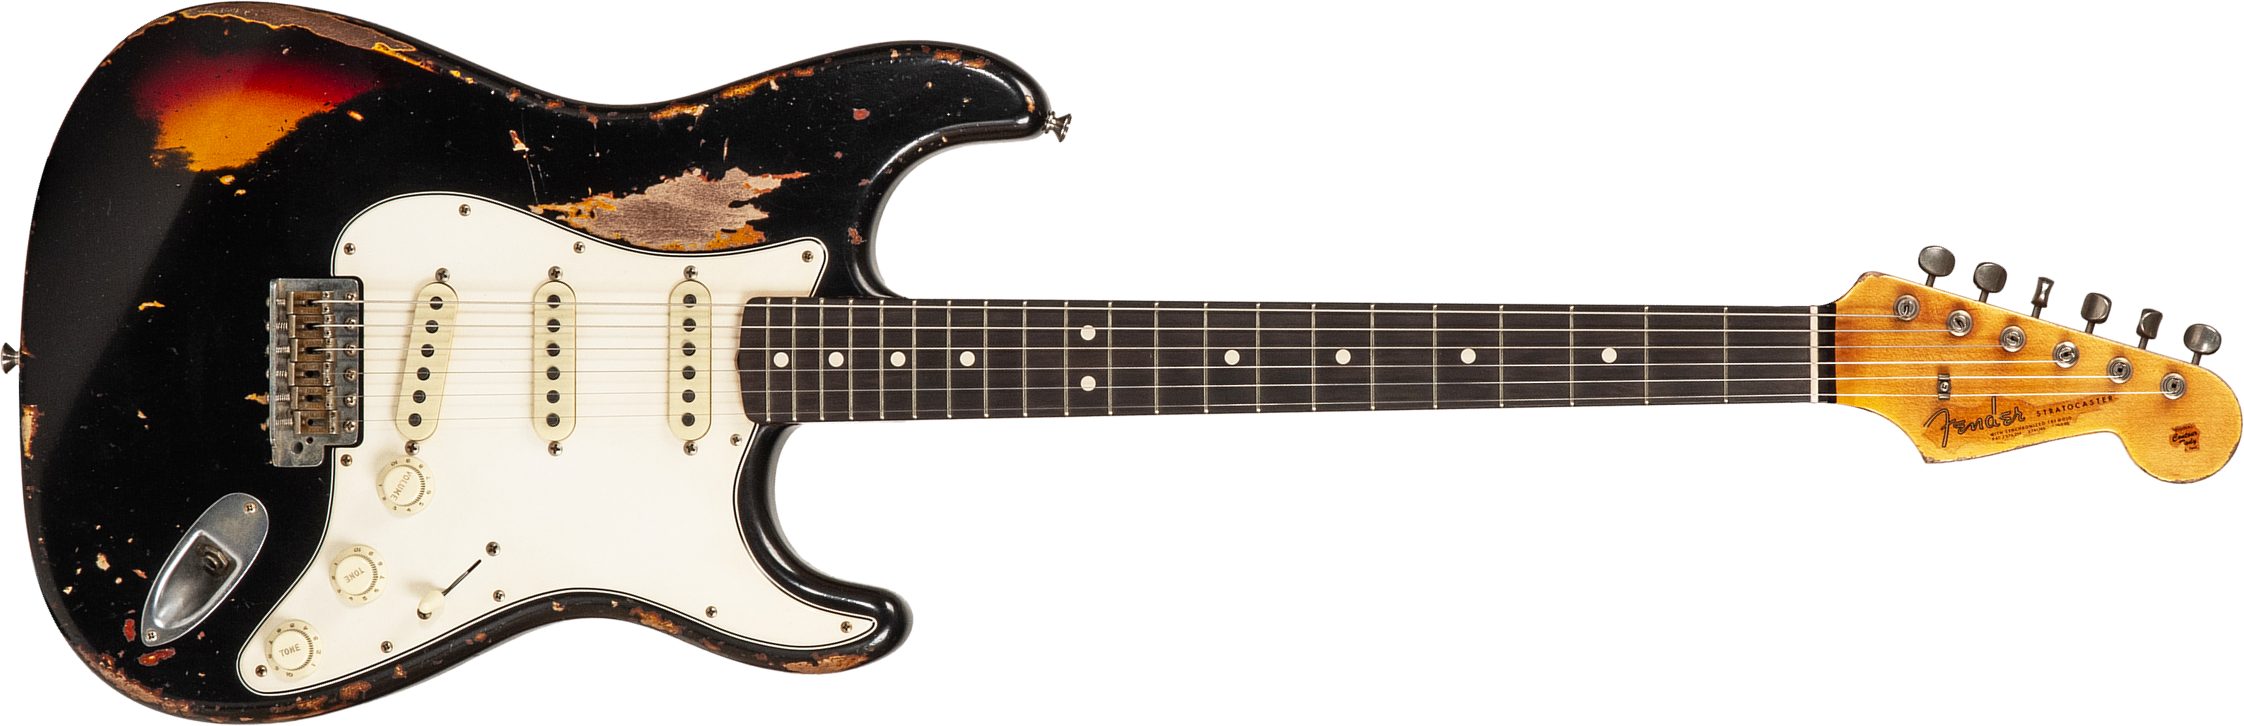 Fender Custom Shop Strat 1963 Masterbuilt K.mcmillin 3s Trem Rw #r127357 - Heavy Relic Black Ov. 3-color Sunburst - E-Gitarre in Str-Form - Main pictu